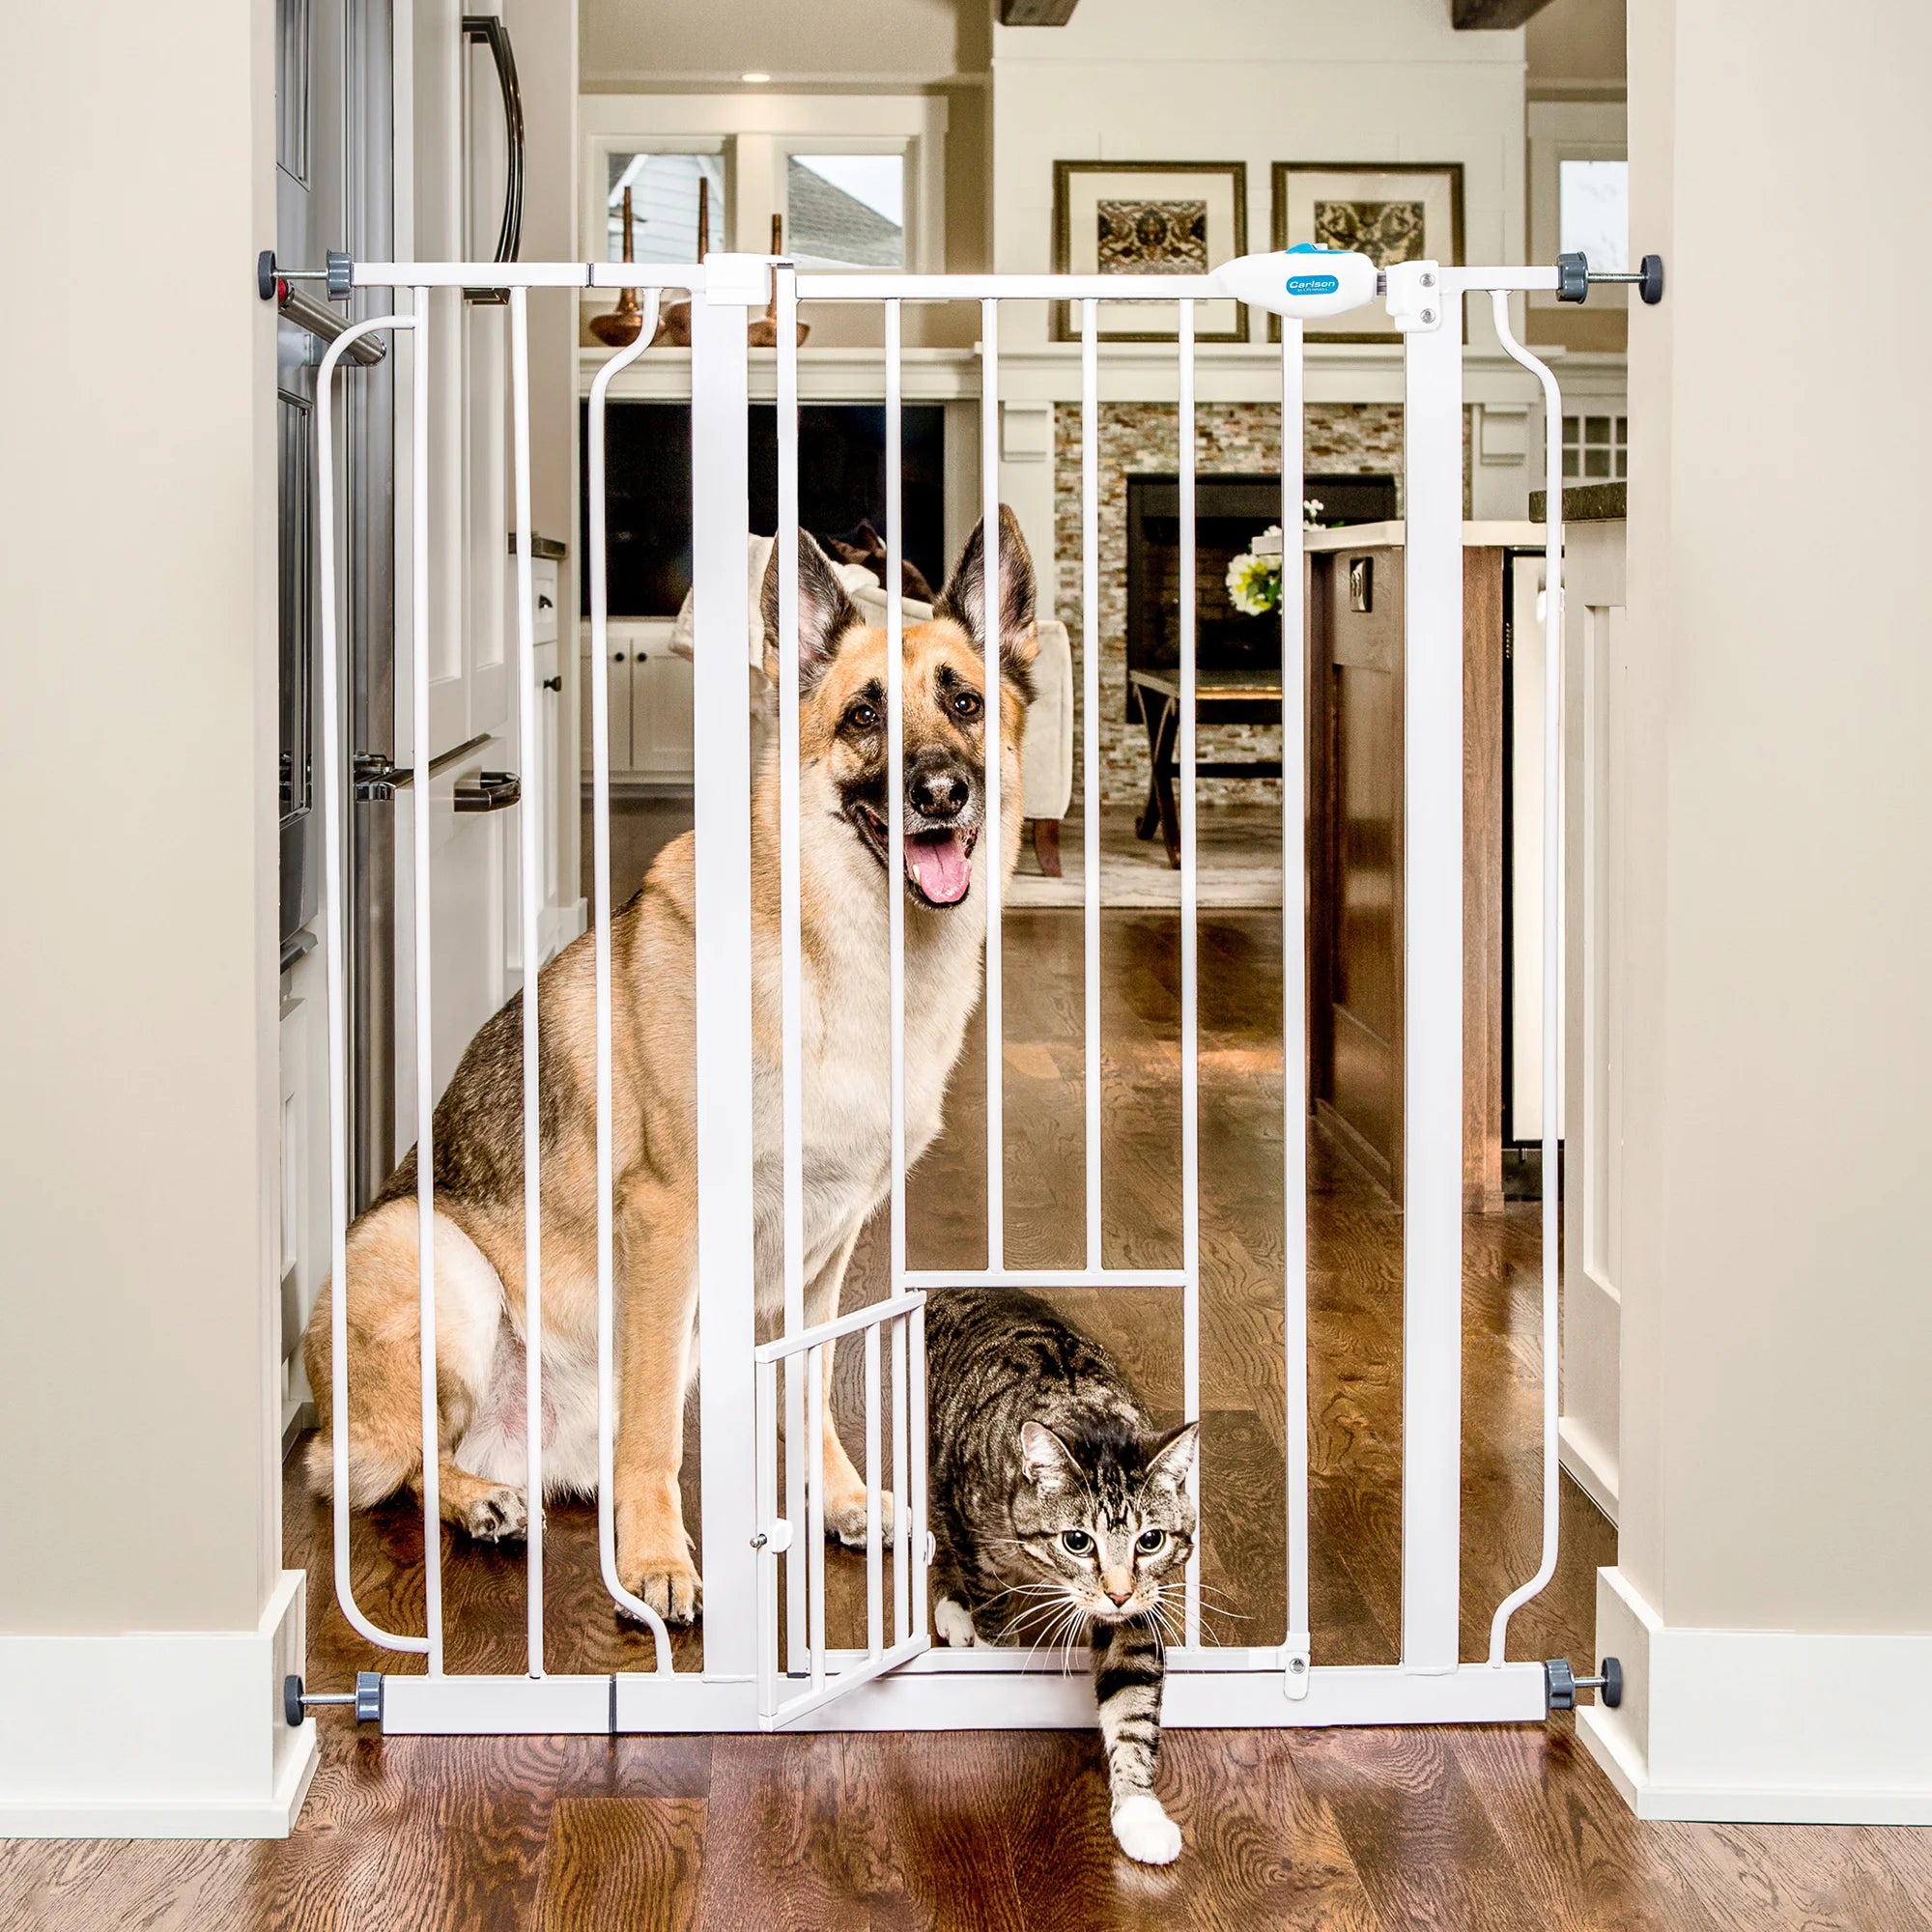 Dog sitting in kitchen and cat walking through Small Pet Door of 41" Extra Tall Walk-Thru Pet Gate.